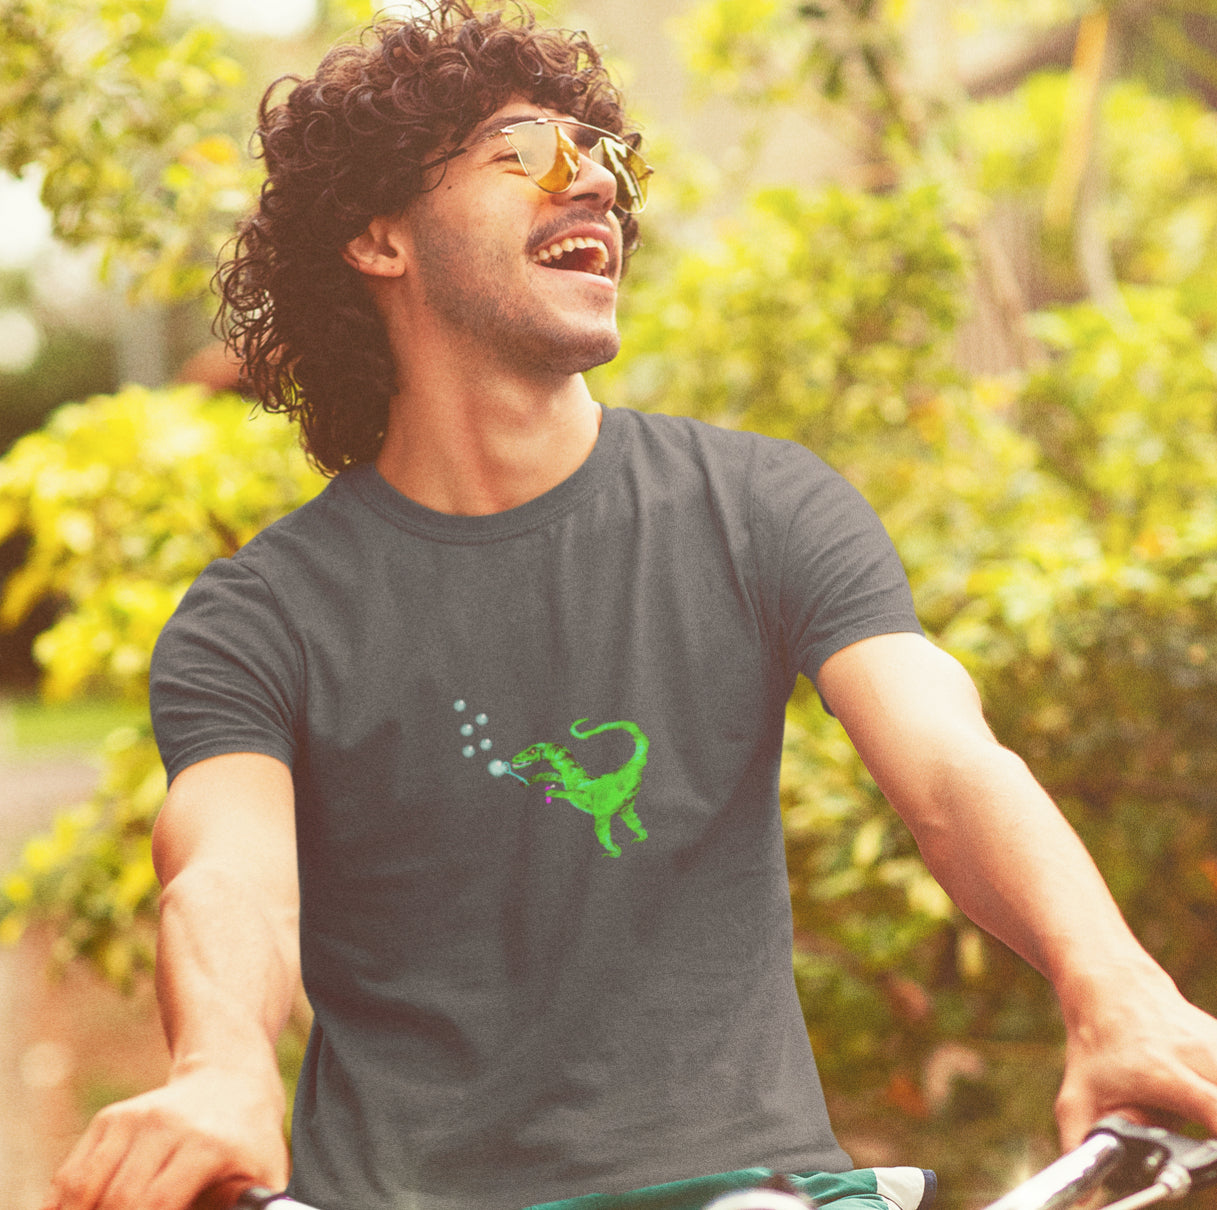 Dinosaur Velociraptor | Organic Cotton T Shirt worn by a man on a bike